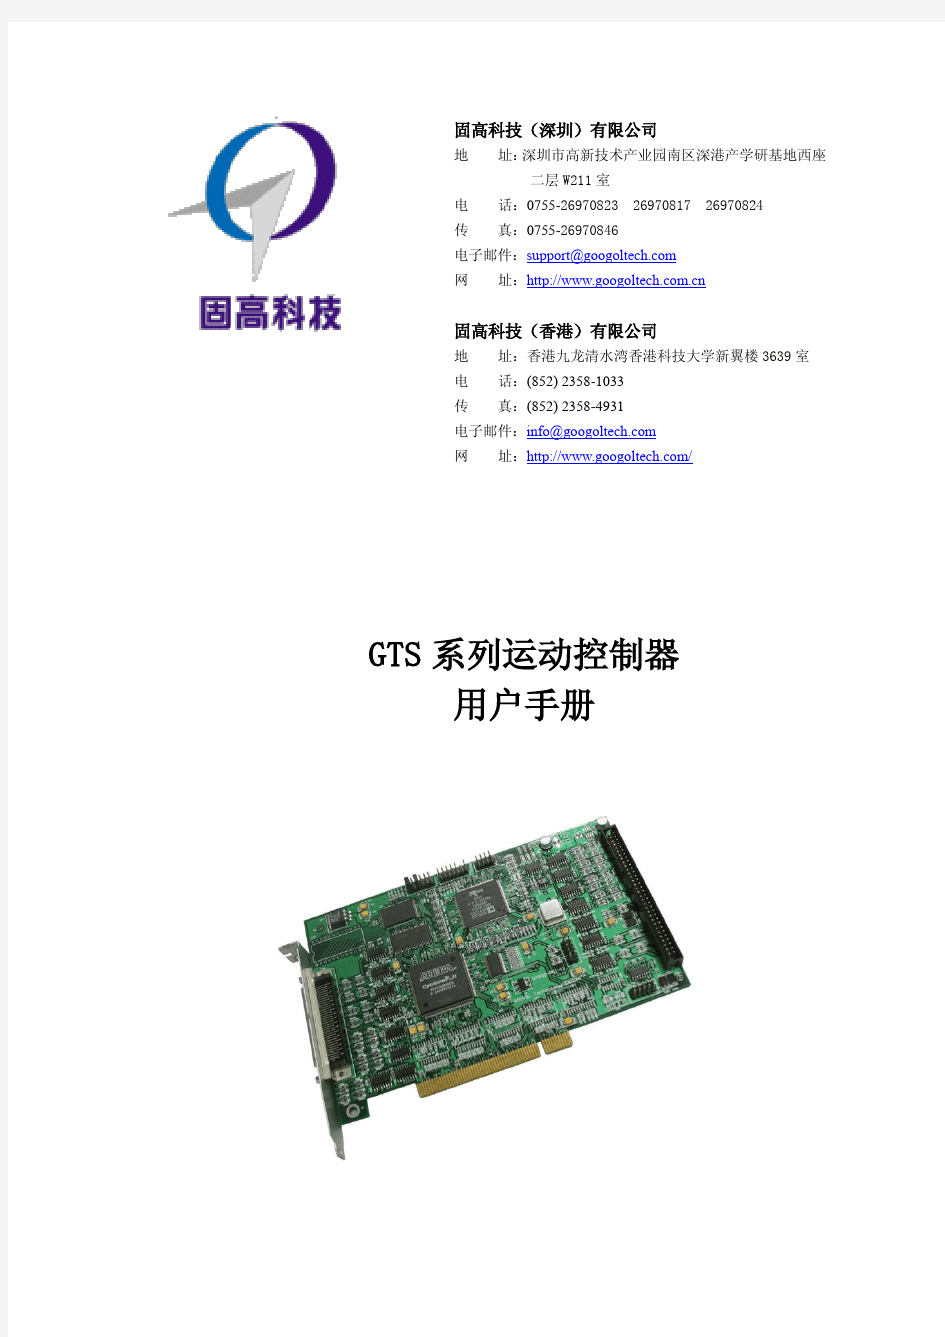 GTS-400-PV(G)-PCI系列运动控制器用户手册